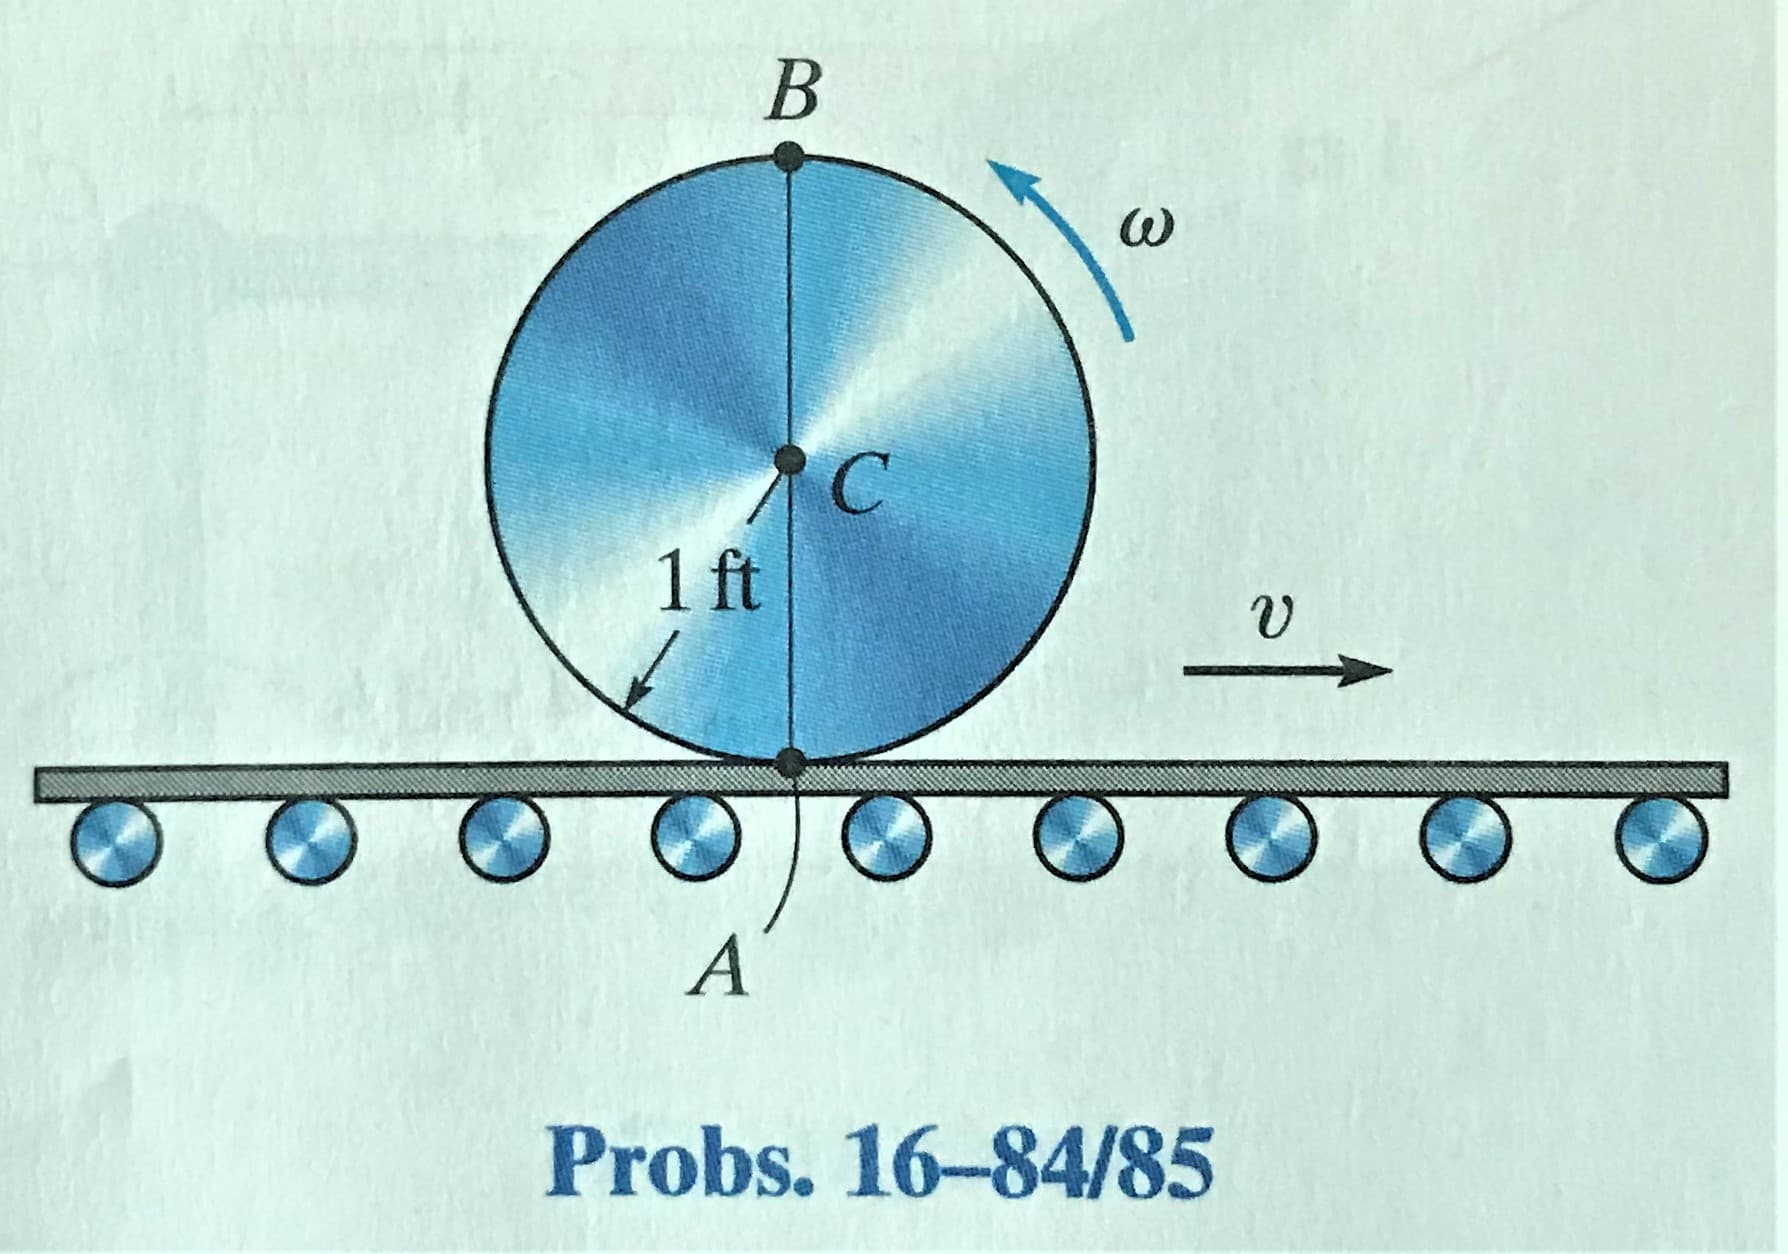 B
AC
1 ft
A'
Probs. 16-84/85
